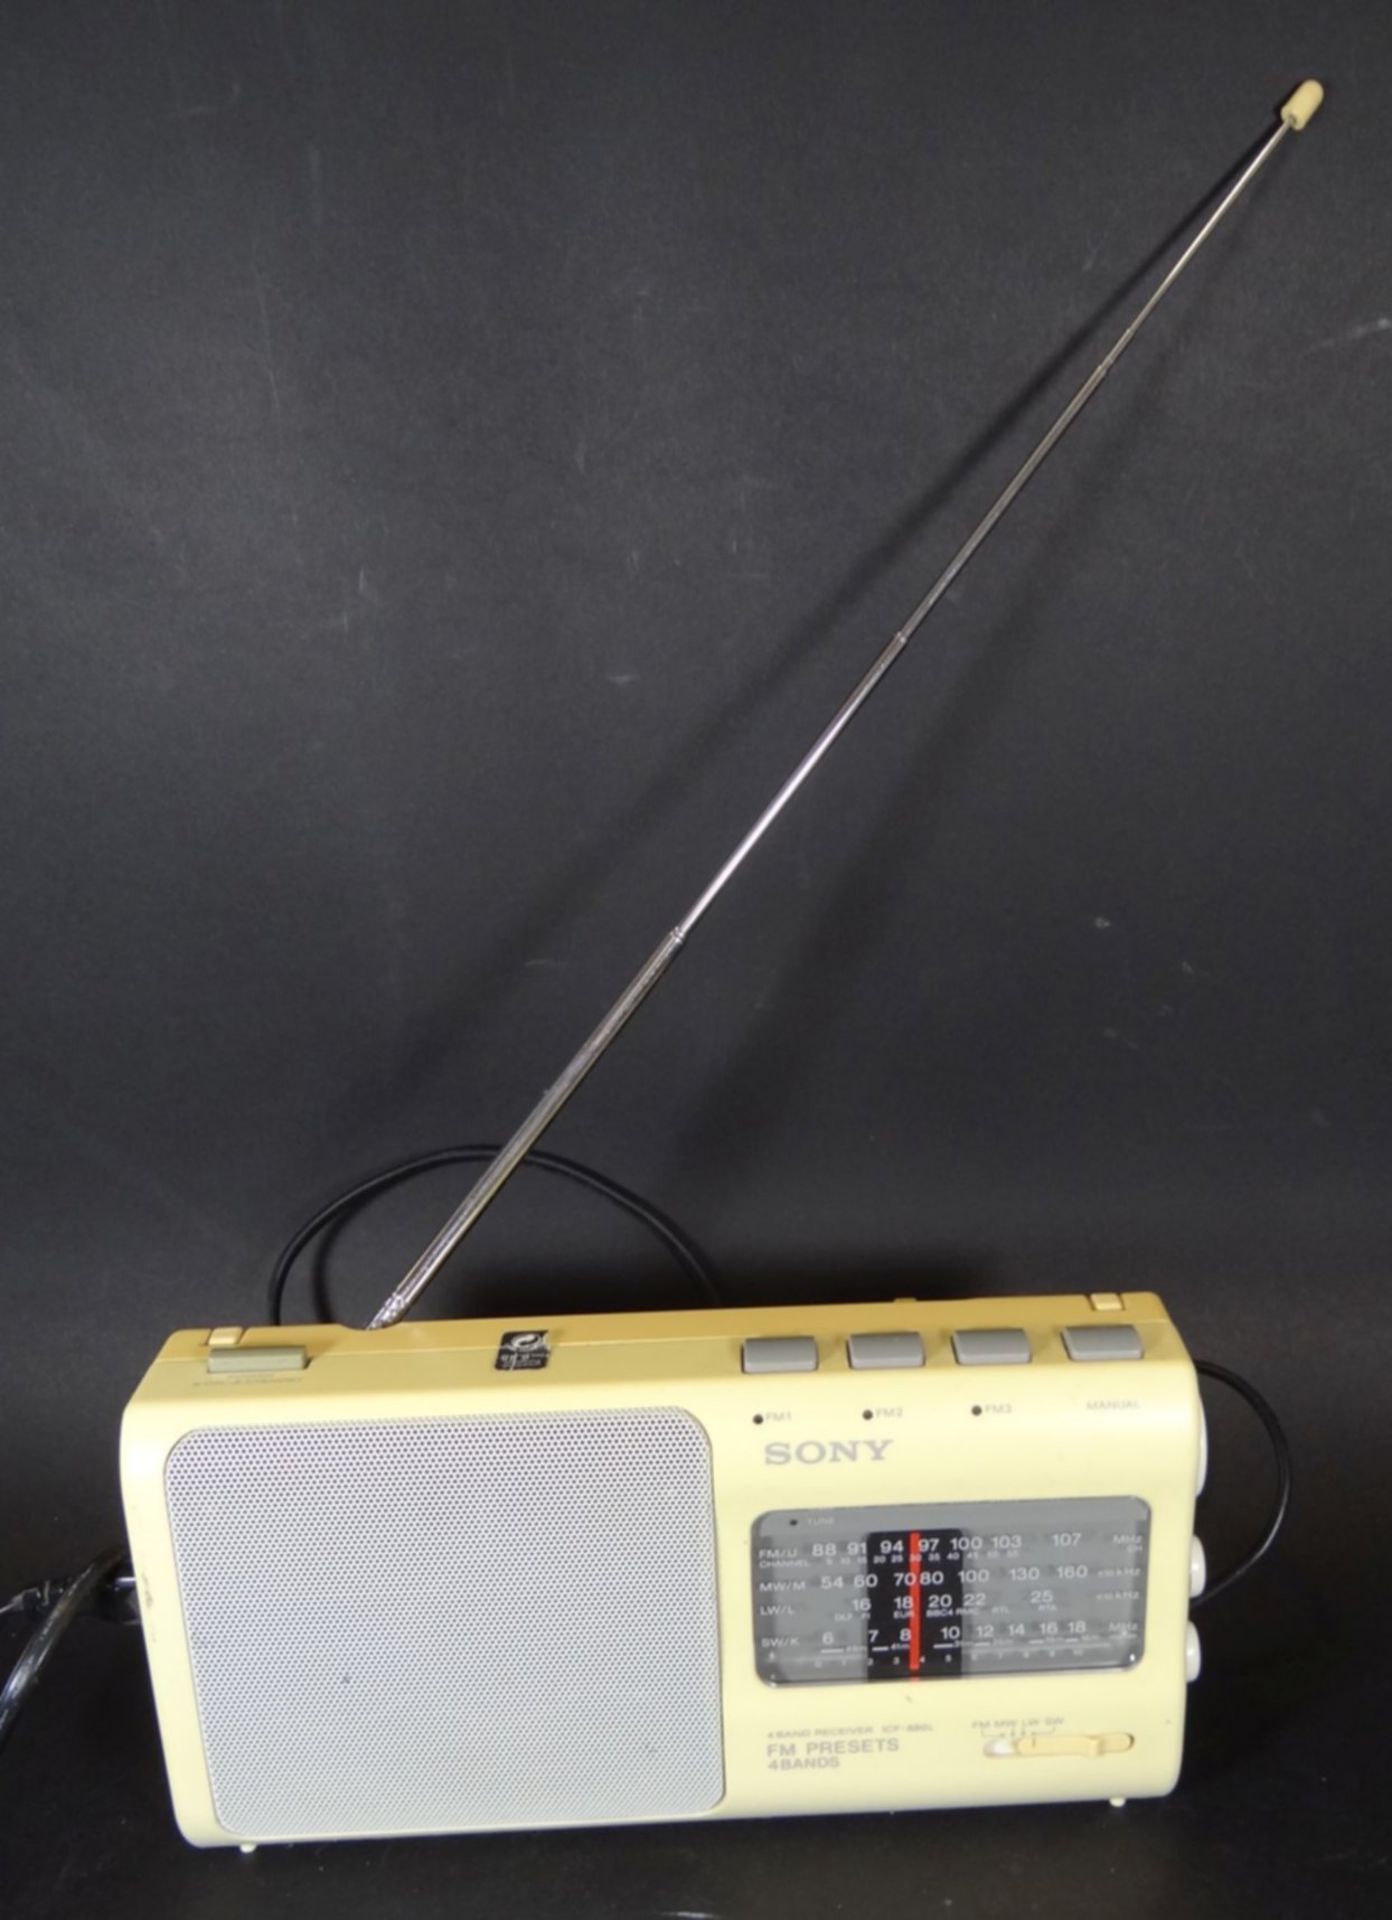 kl. Transistor Radio "Sony" 4-Band , funktionstüchtig, H-12 cm, 25x5 c - Bild 4 aus 6